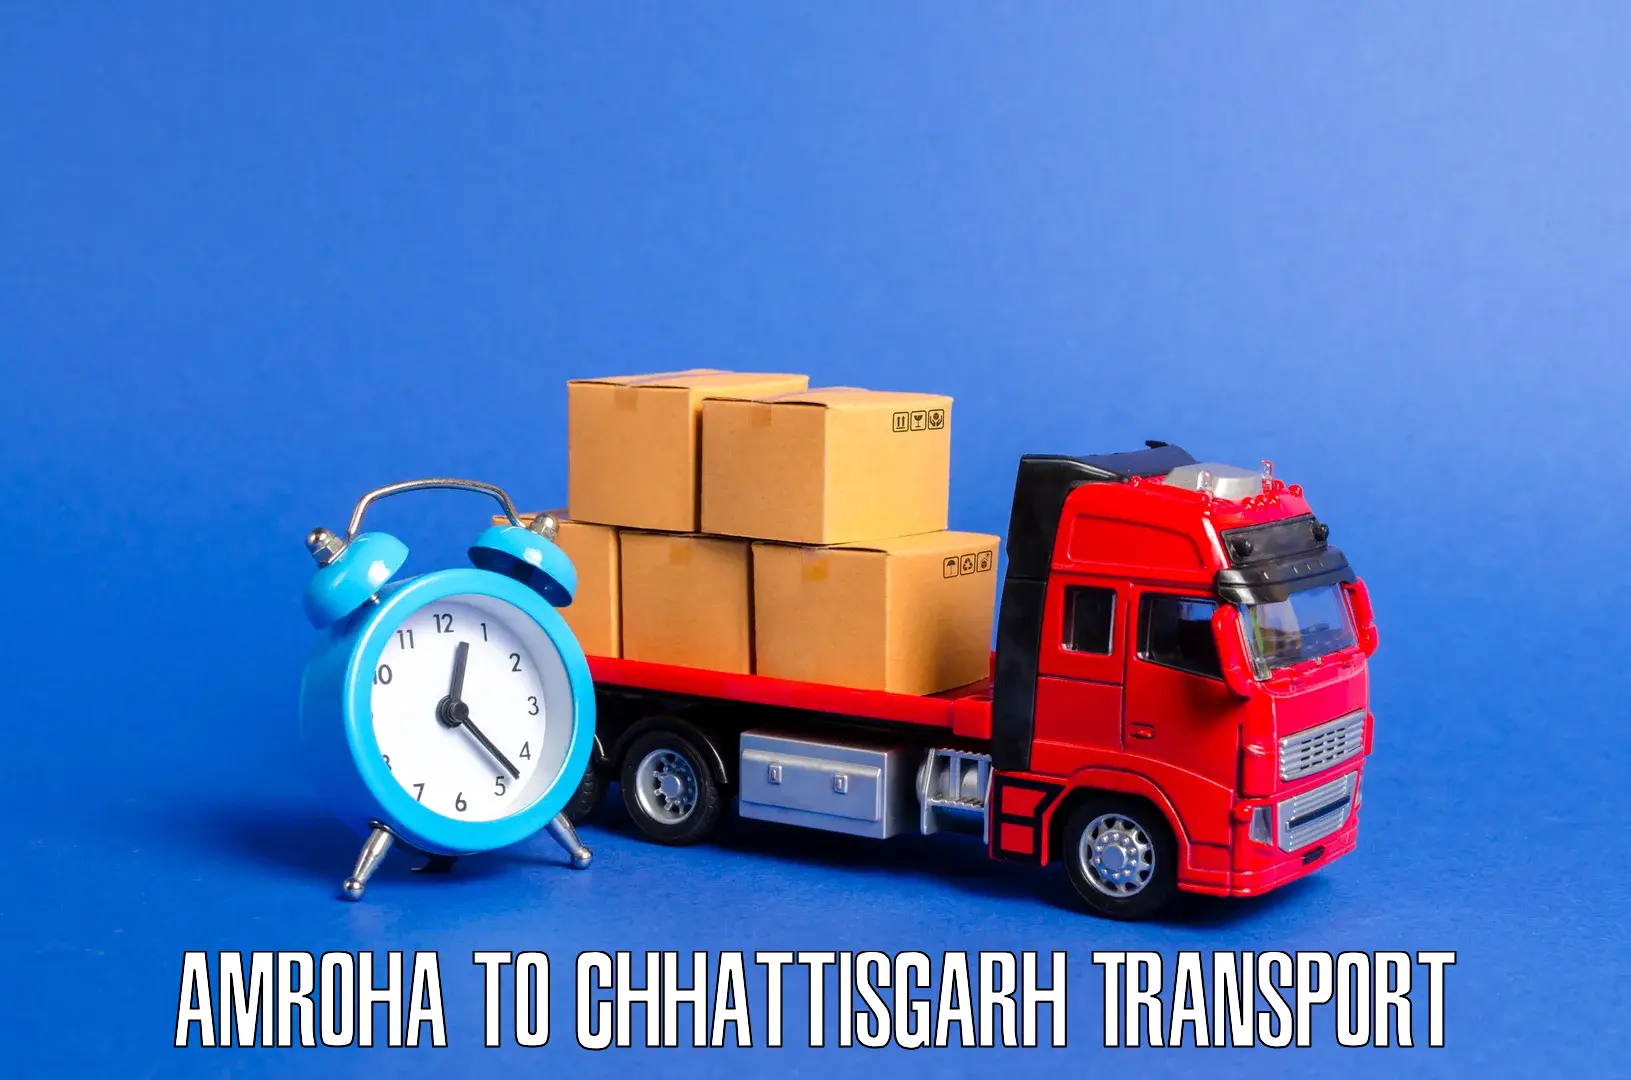 Transport bike from one state to another Amroha to Raigarh Chhattisgarh